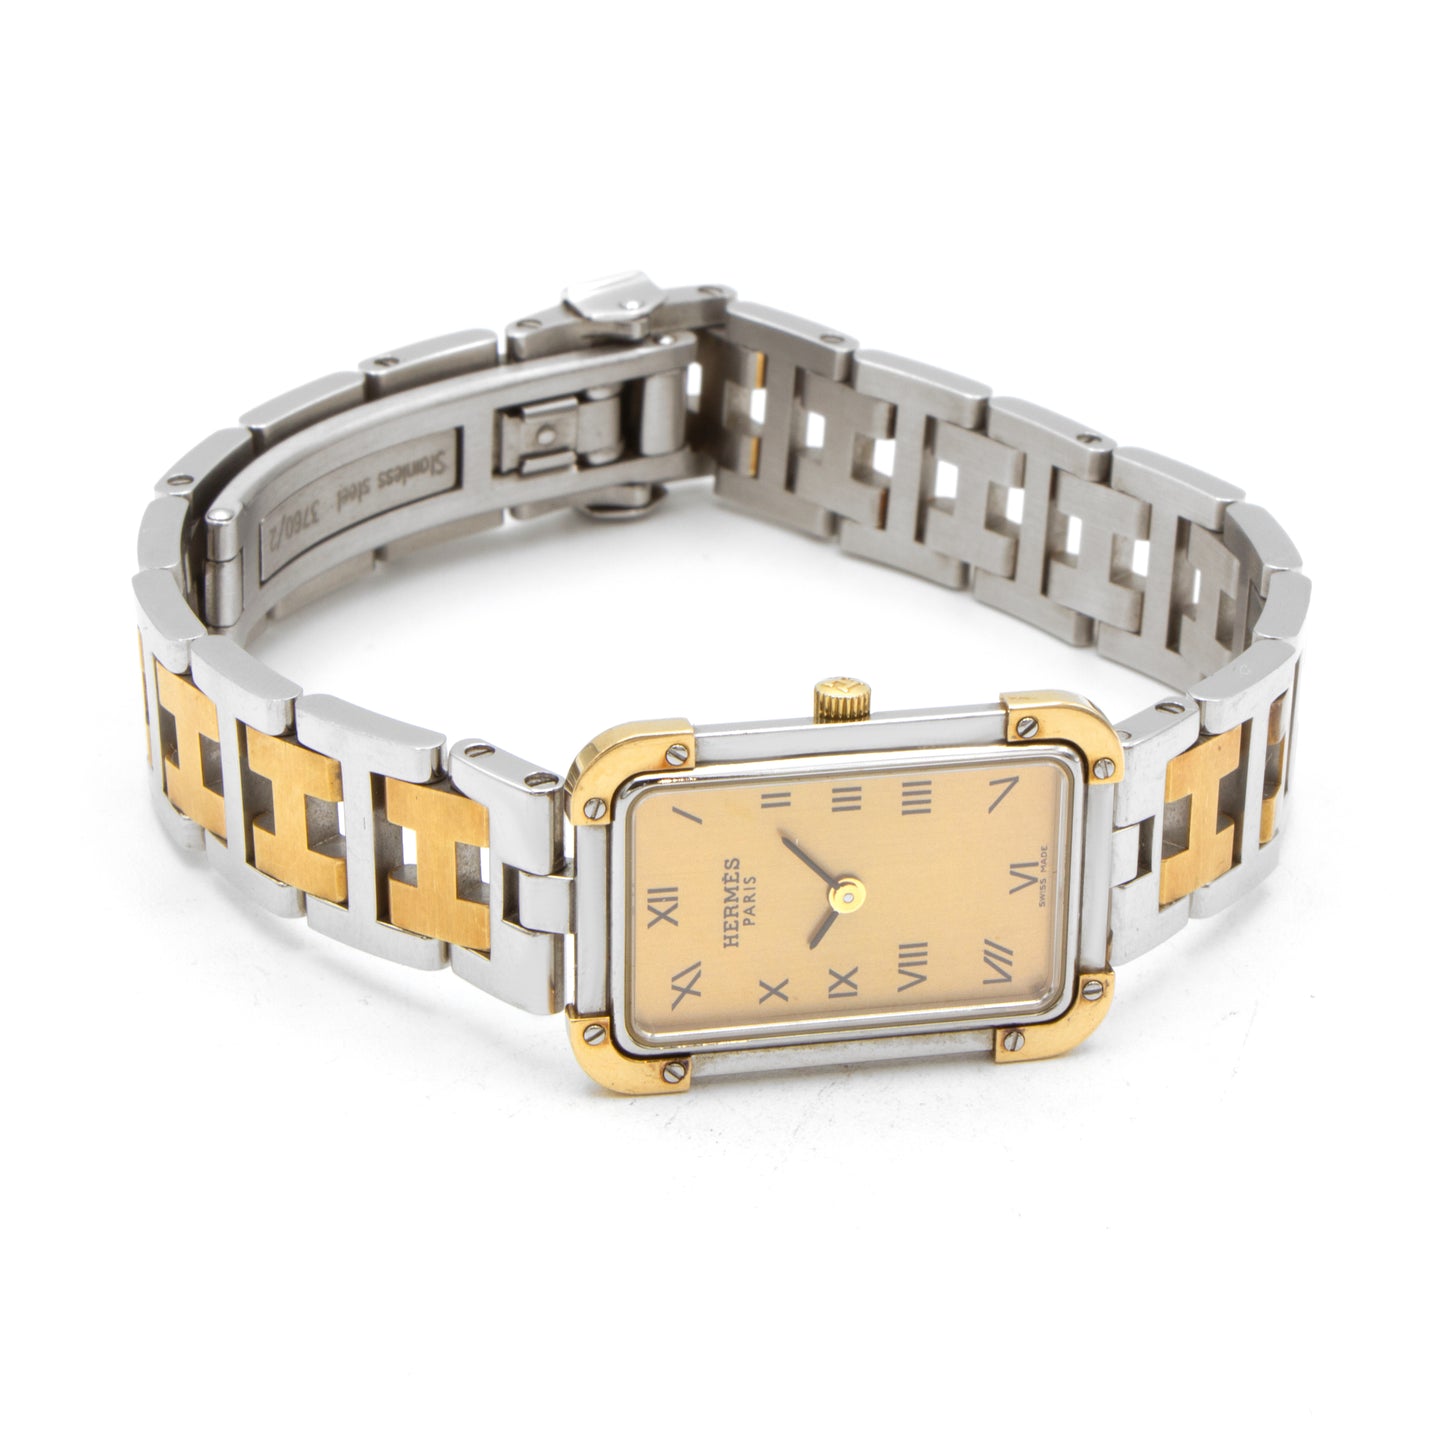 Hermès Croisière watch